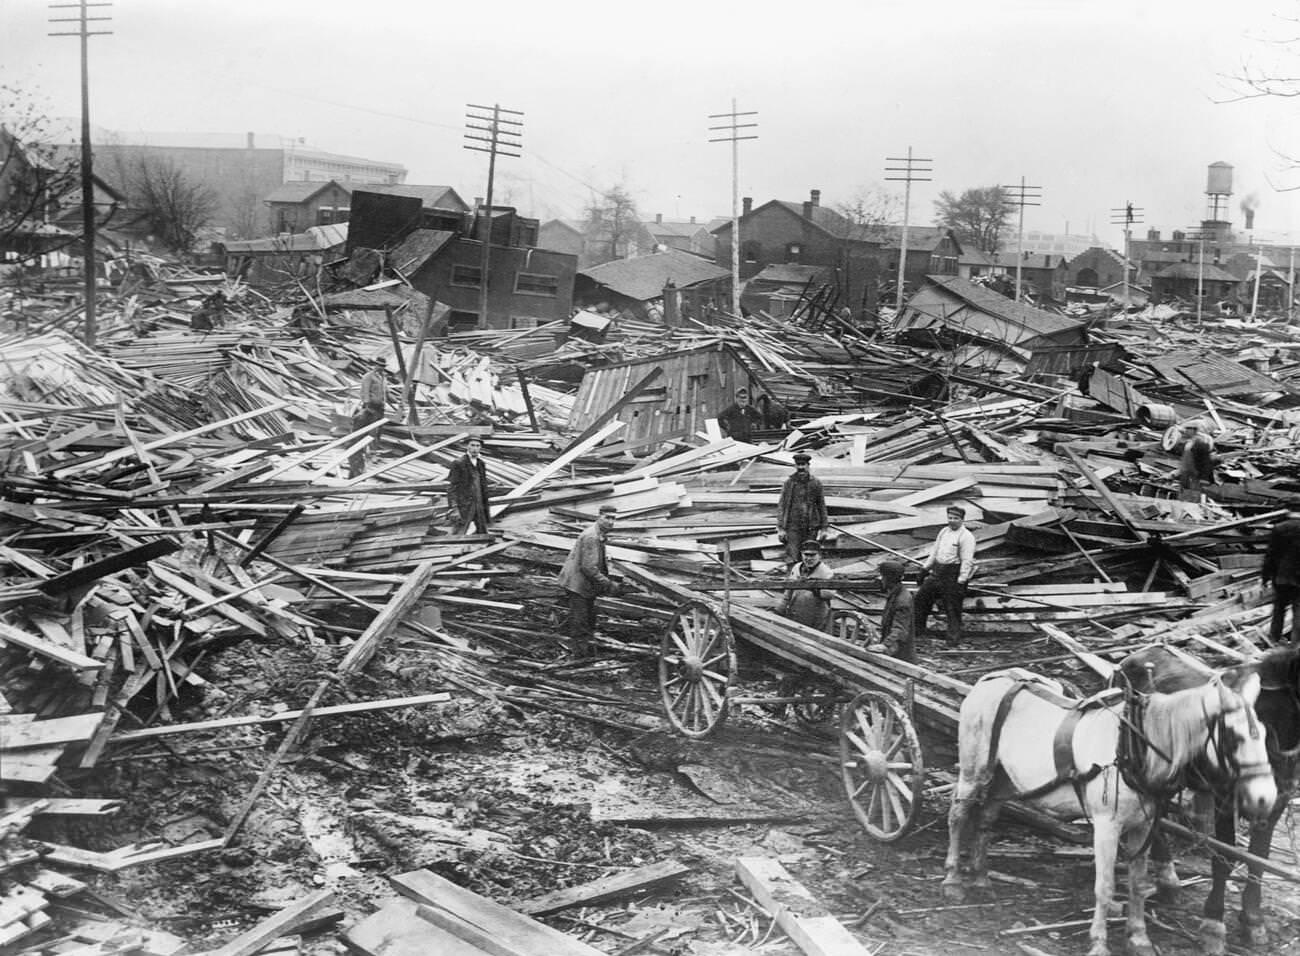 Destruction from the flood in Dayton, Ohio, 1913.